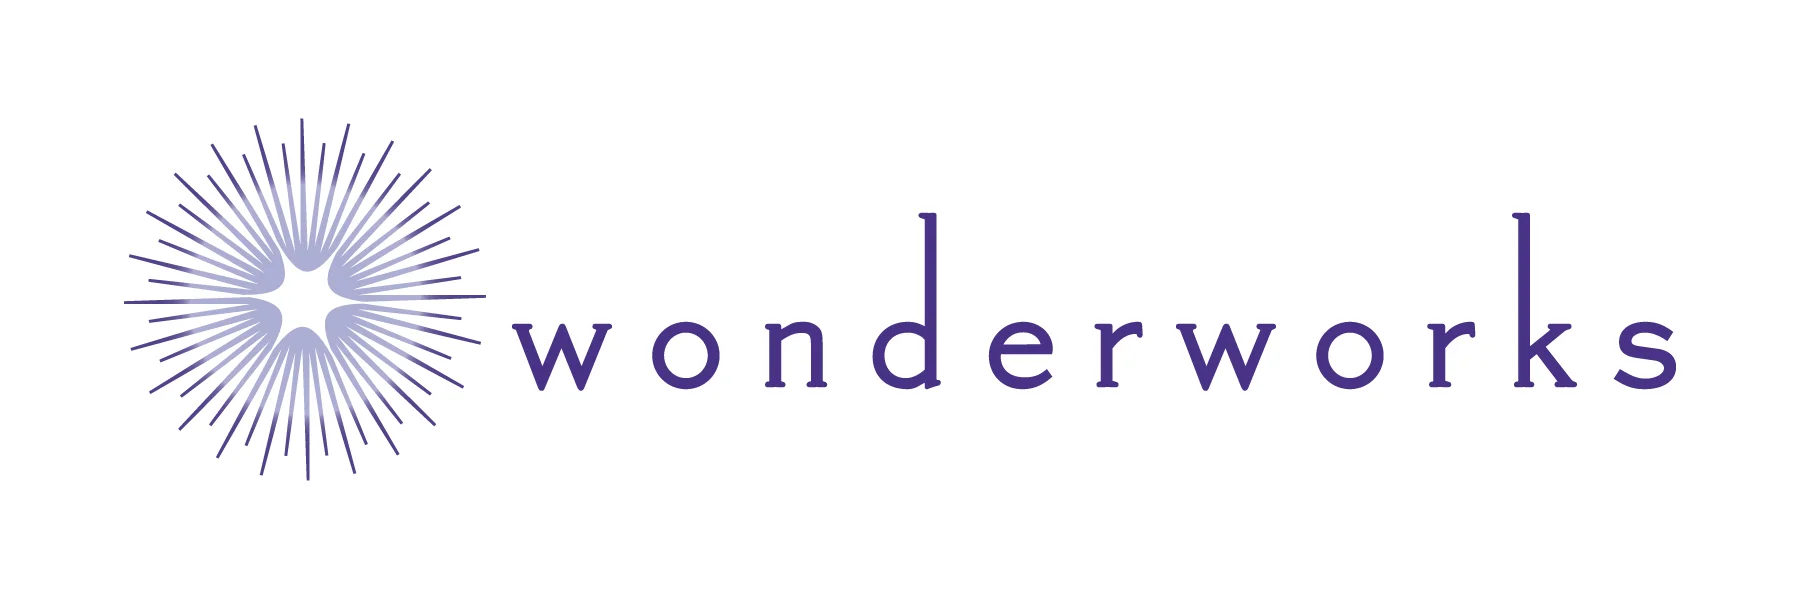 Wonderworks - Tools to Enhance Well-Being